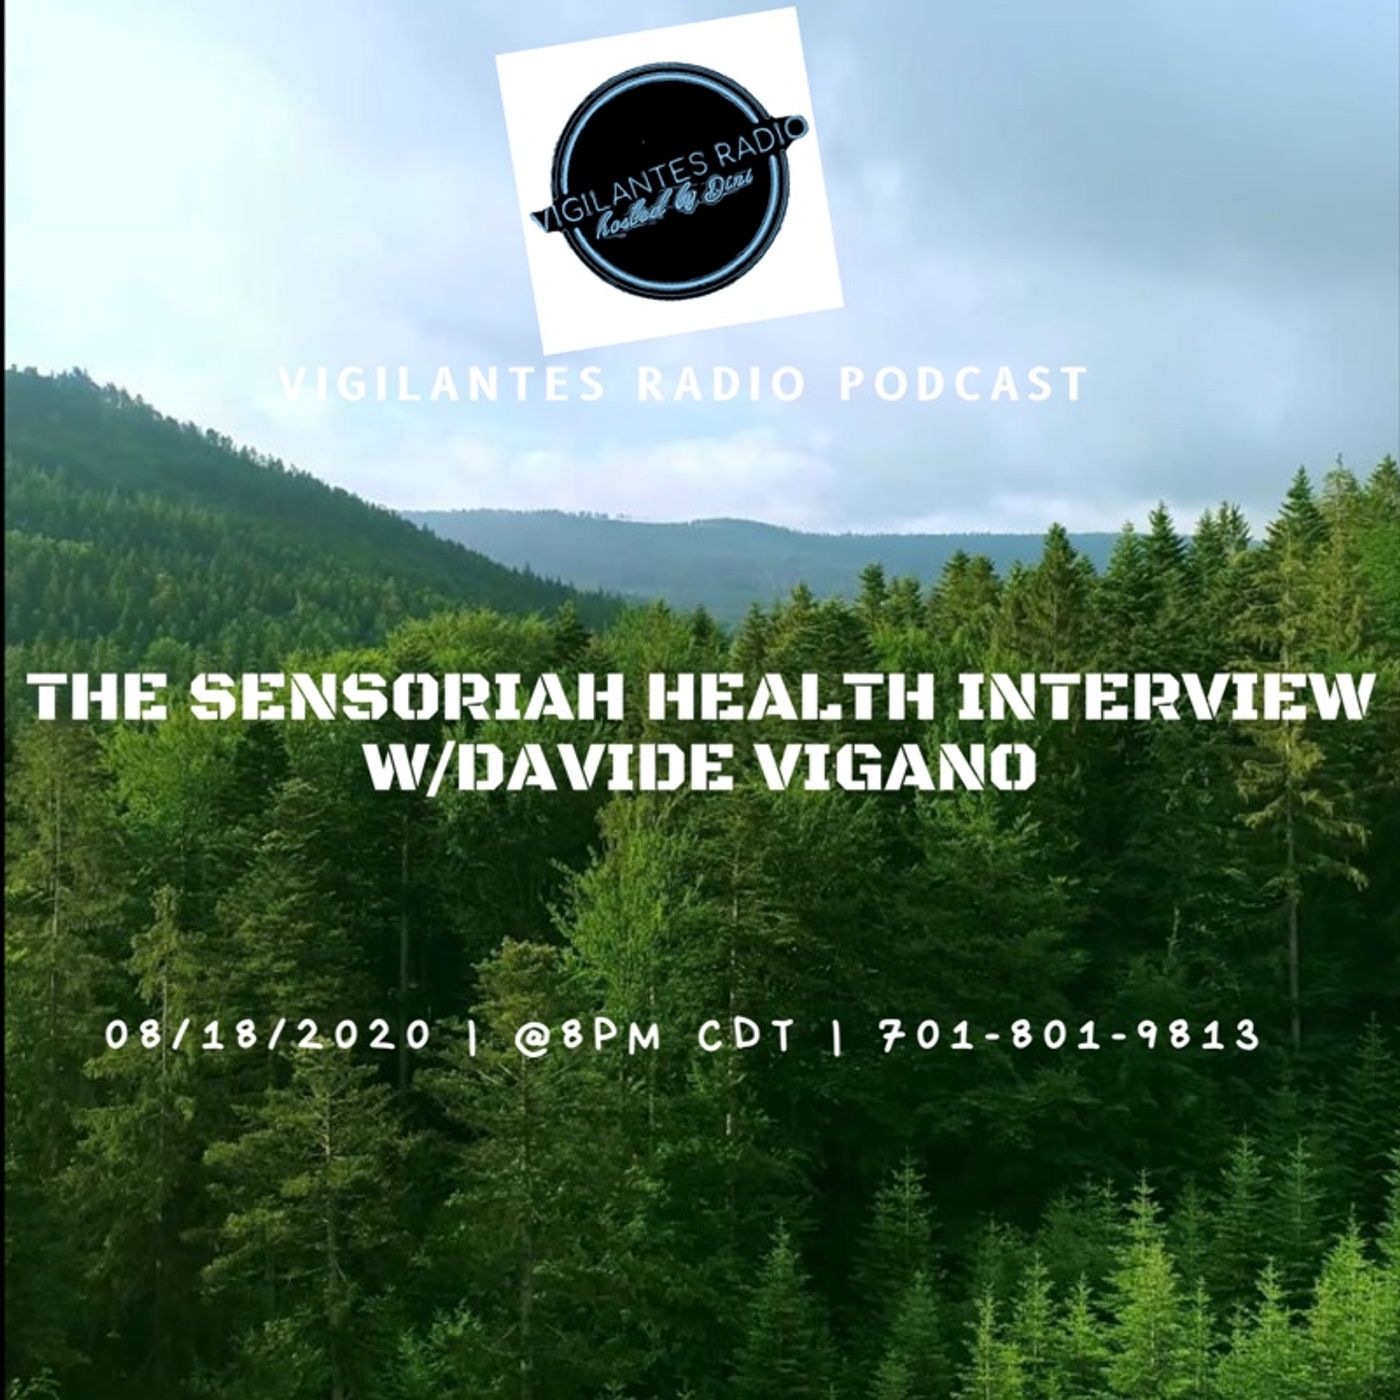 The Sensoriah Health Interview w/Davide Vigano. Image